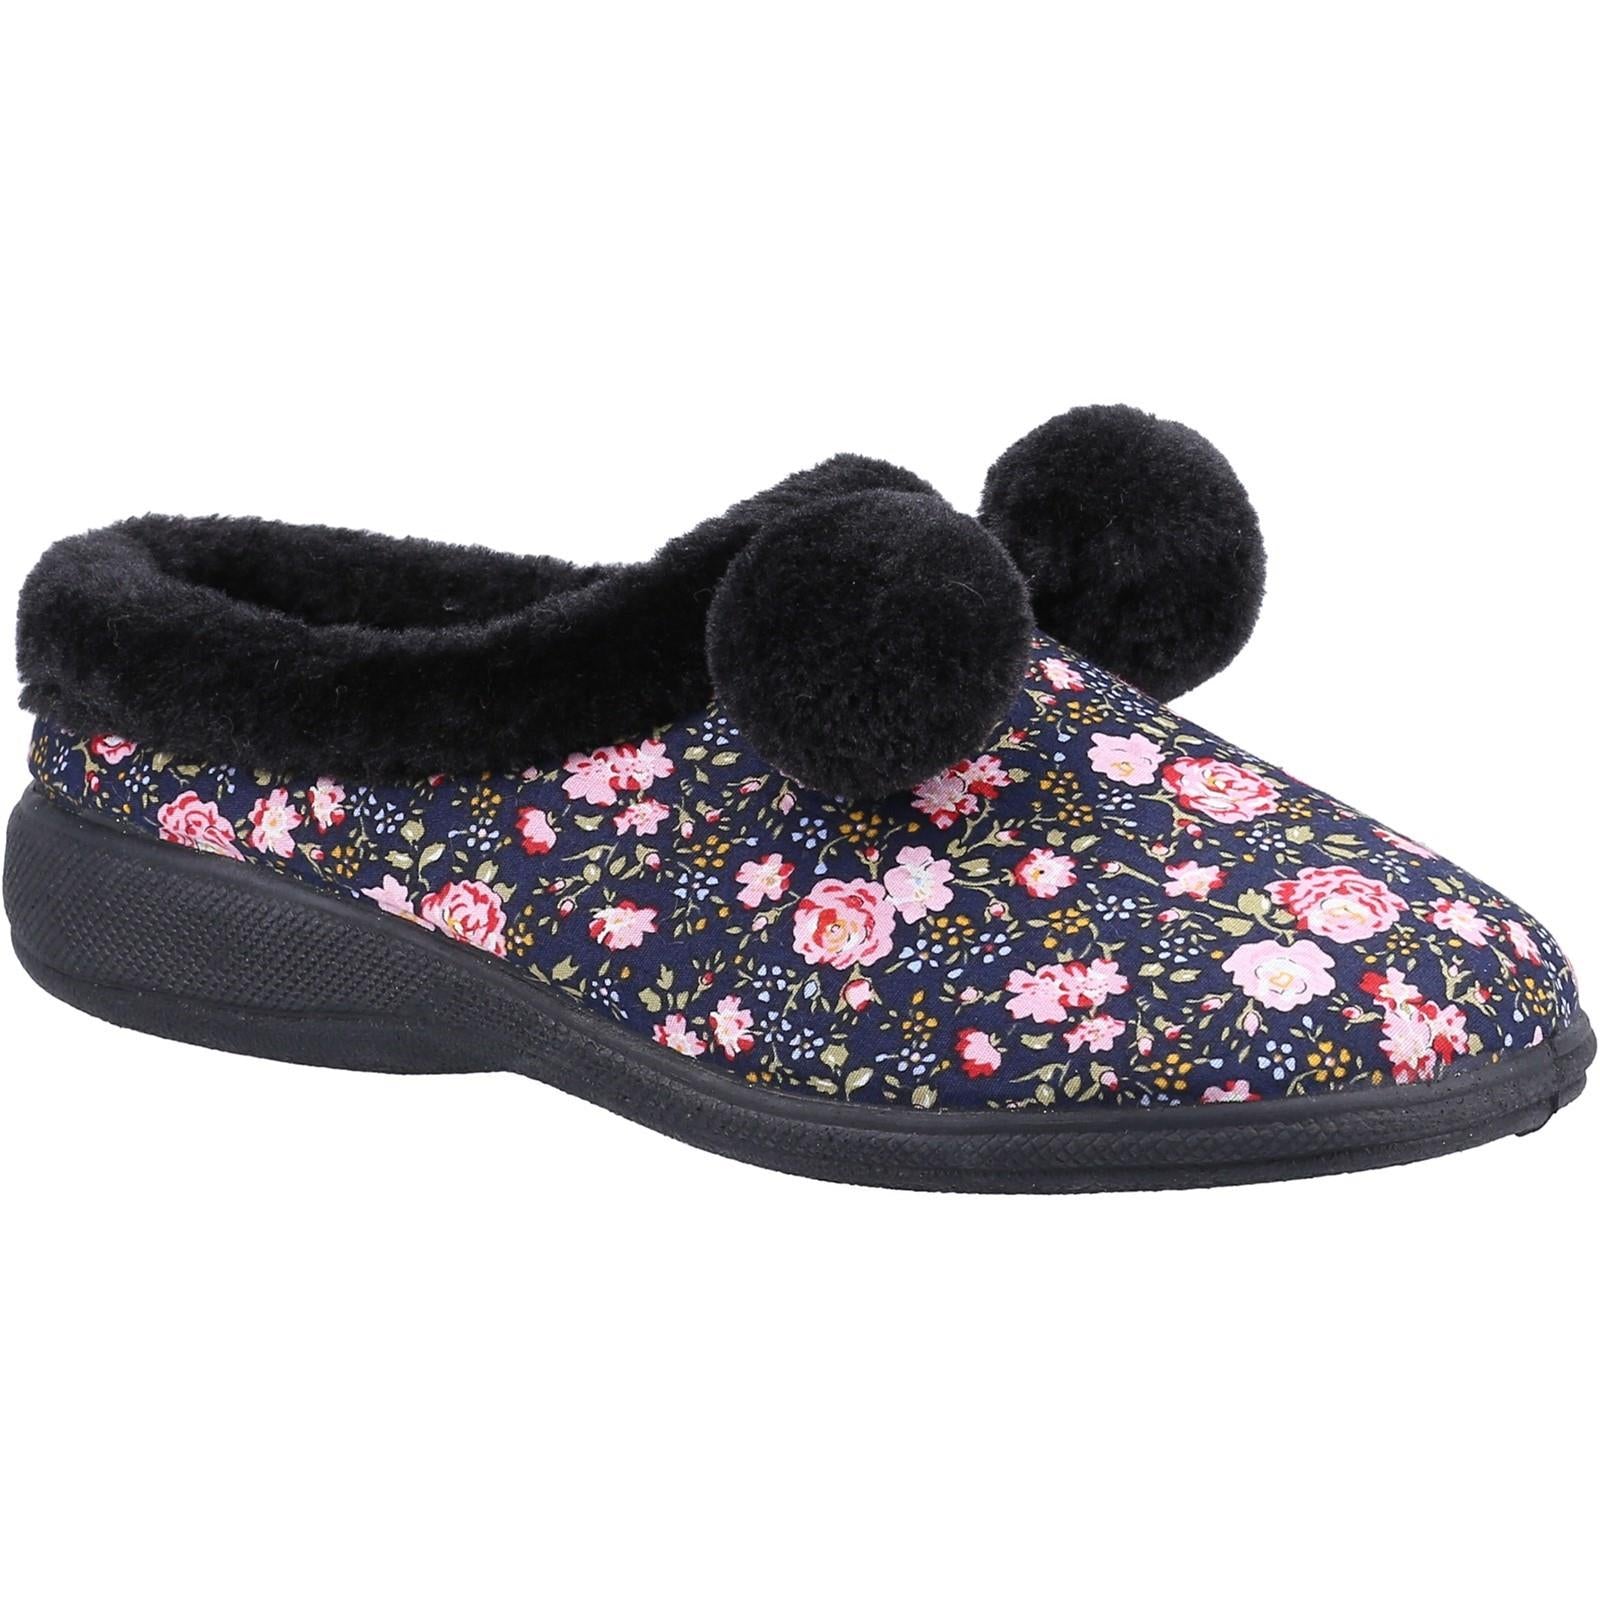 Fleet & Foster Buzzard black multi floral design mule slipper